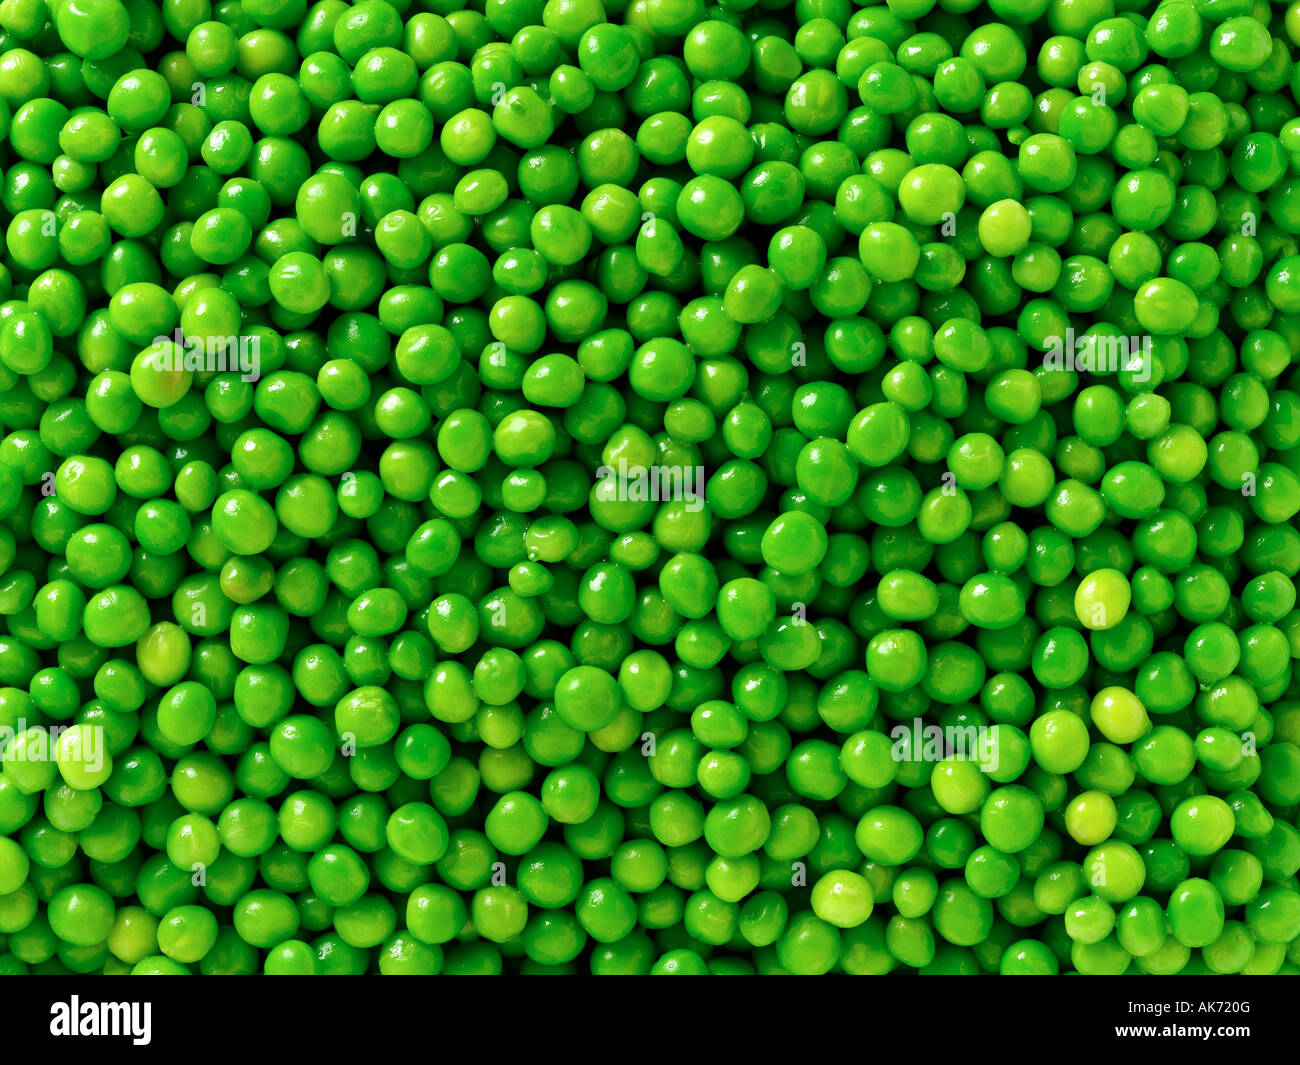 peas Stock Photo